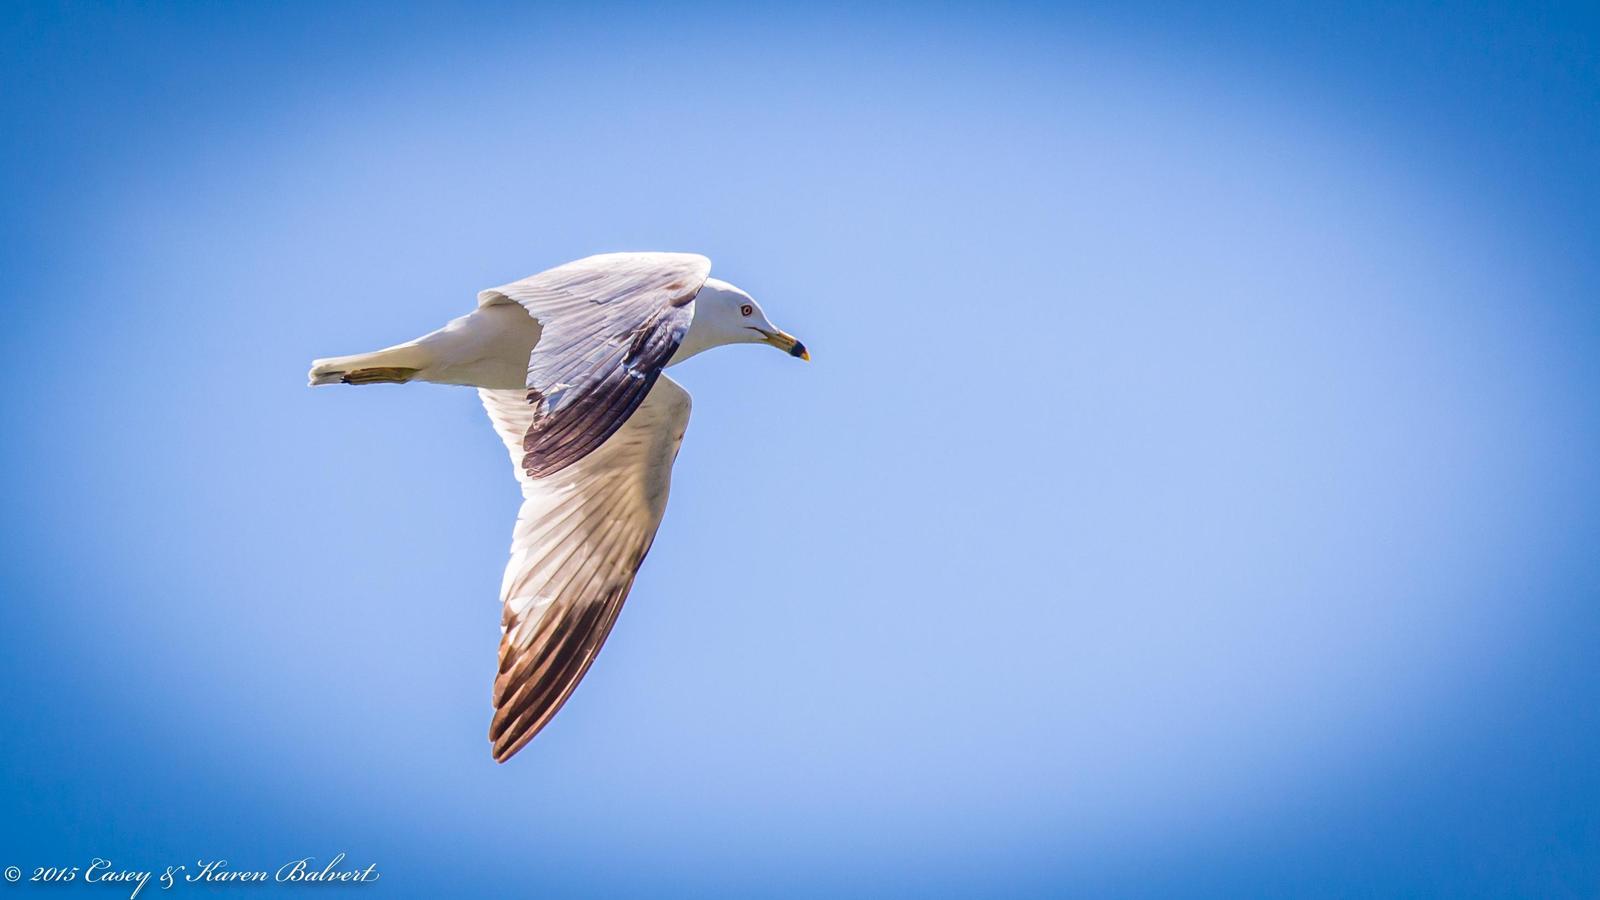 Ring-billed Gull Photo by Casey Balvert